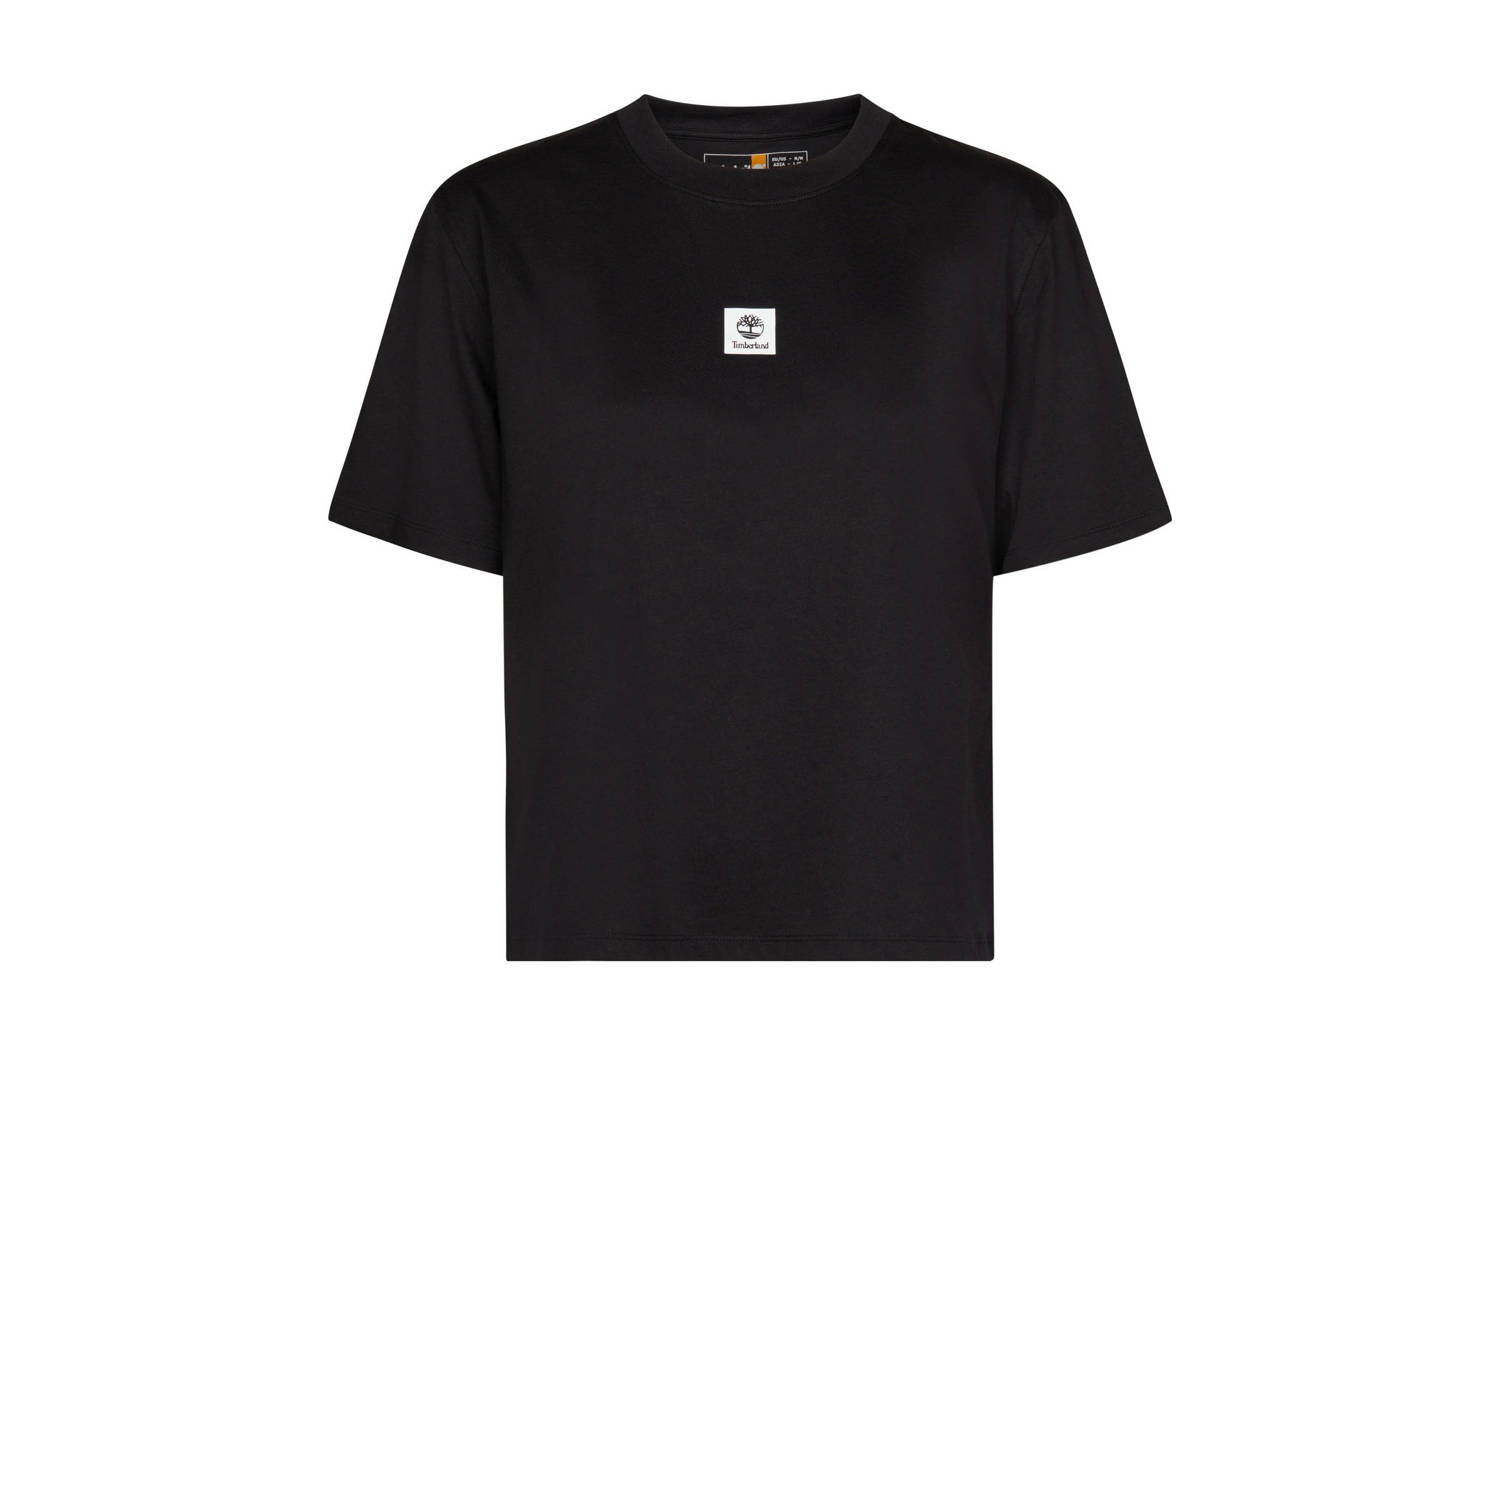 Timberland T-shirt met logo zwart